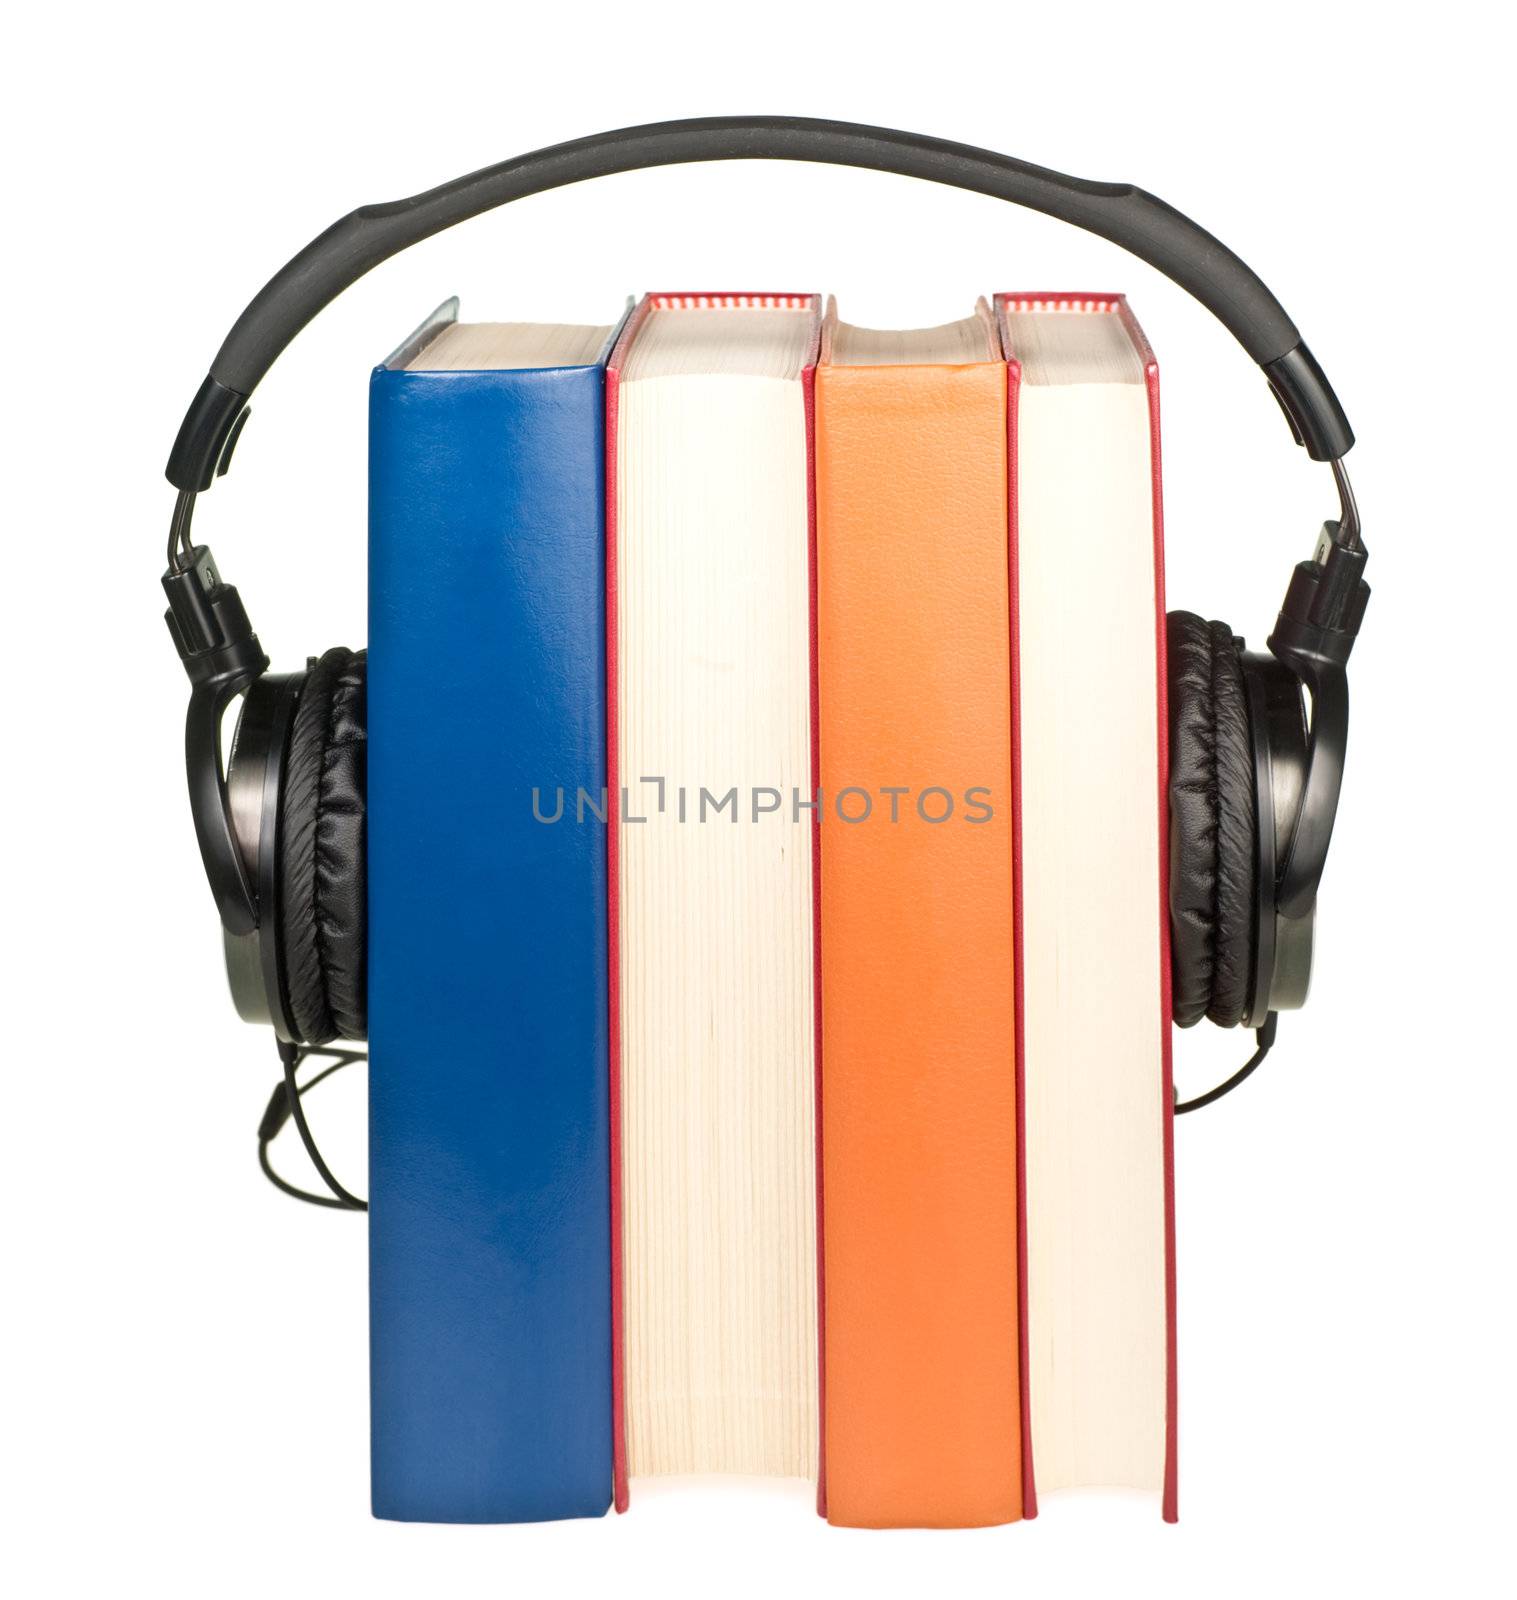 Books row with HI-Fi headphones on white background